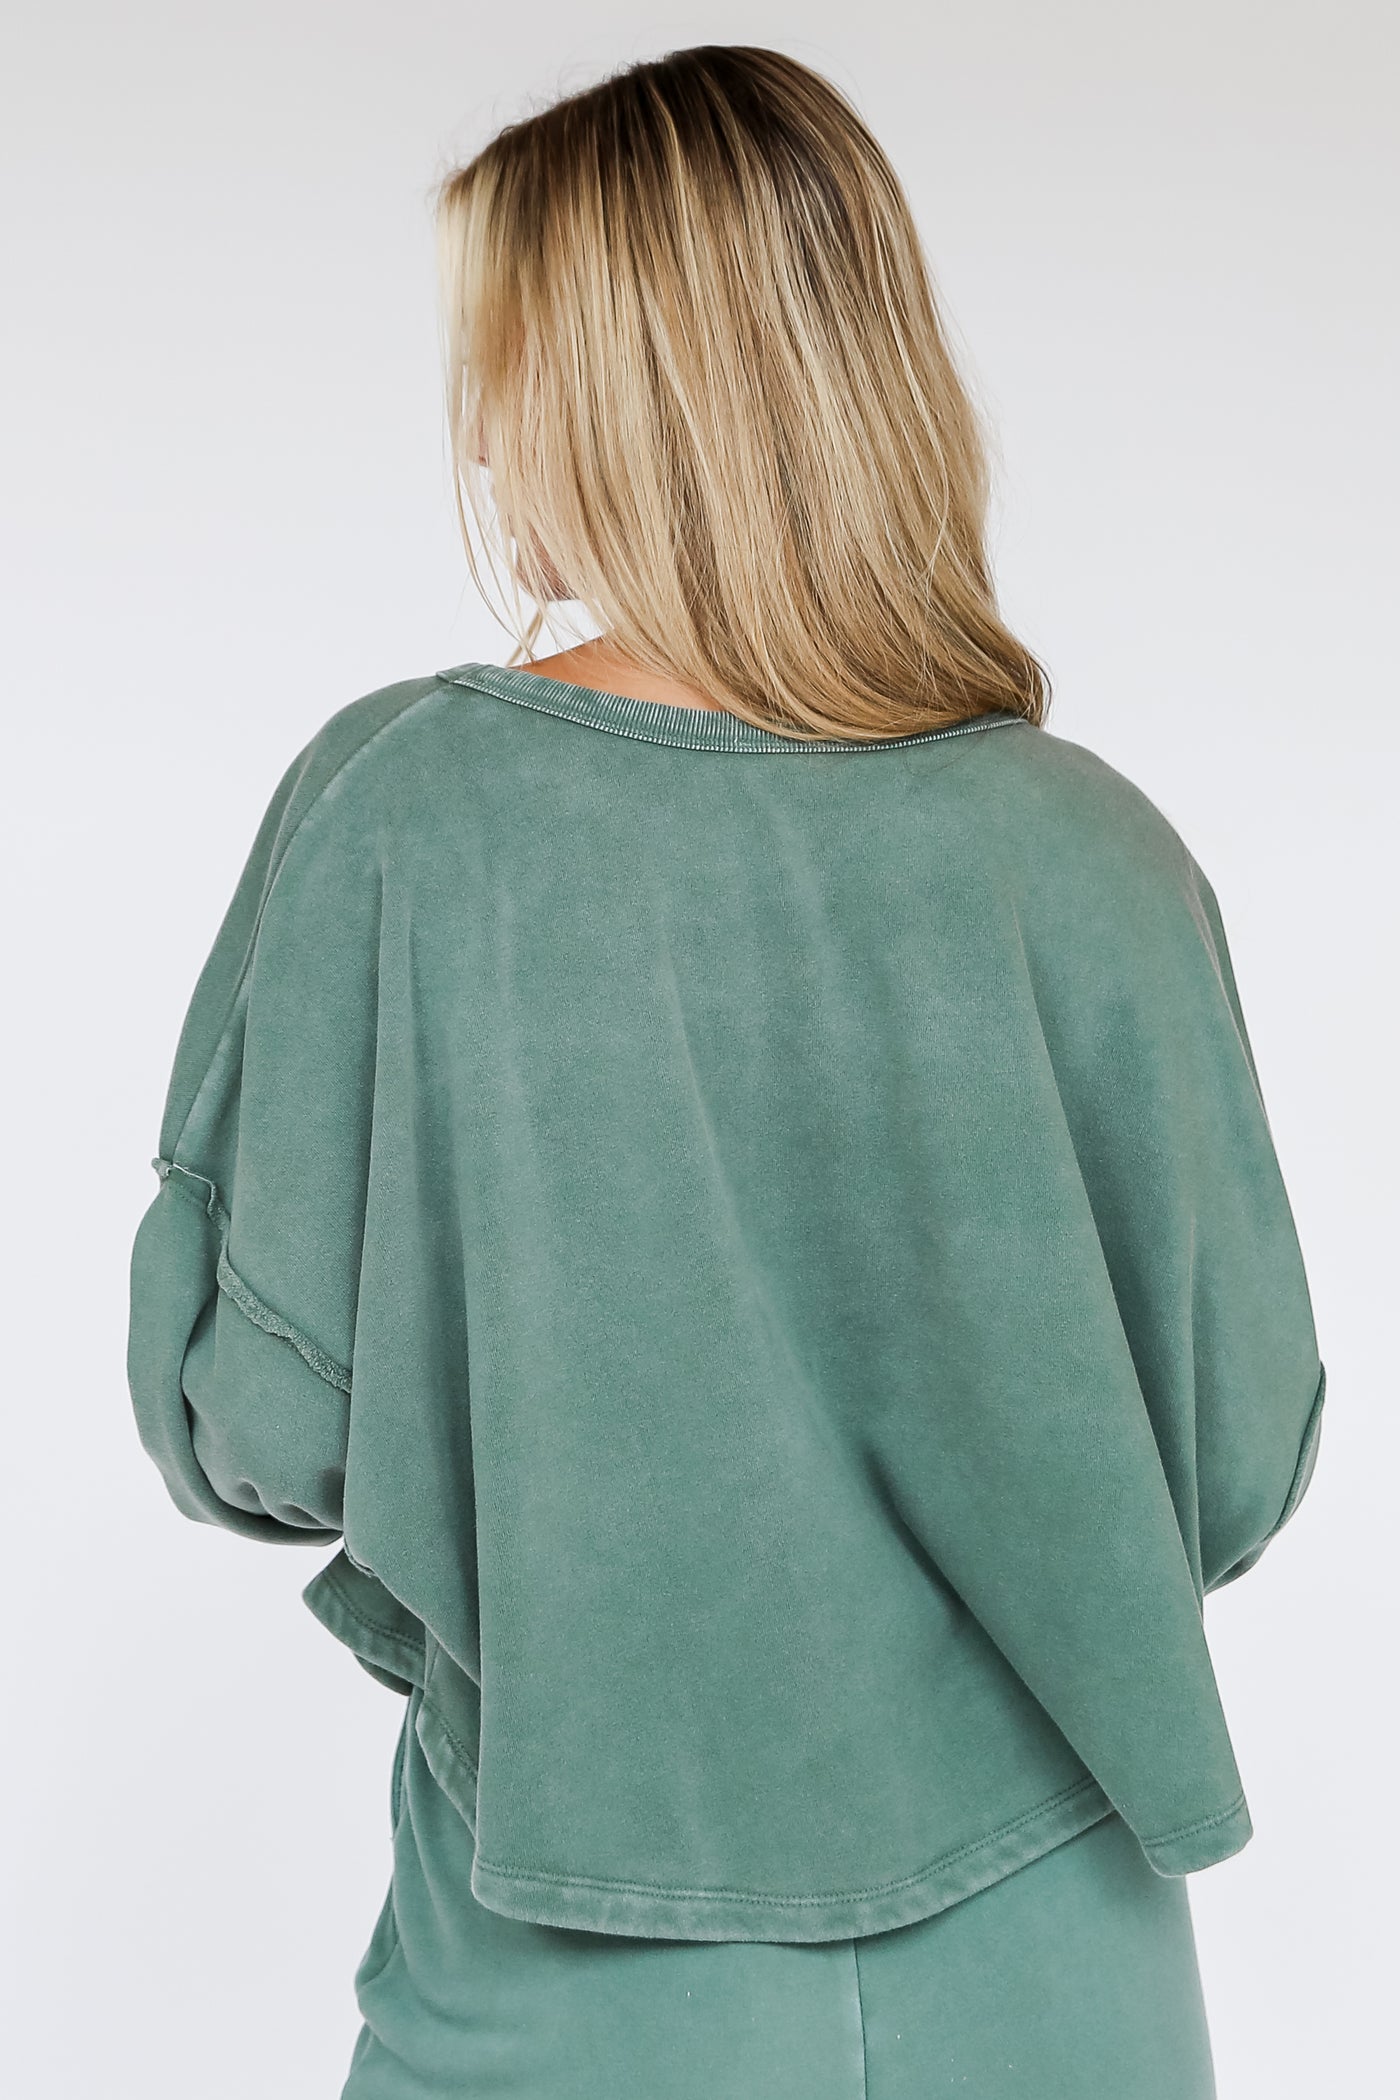 sage green Fleece Pullover